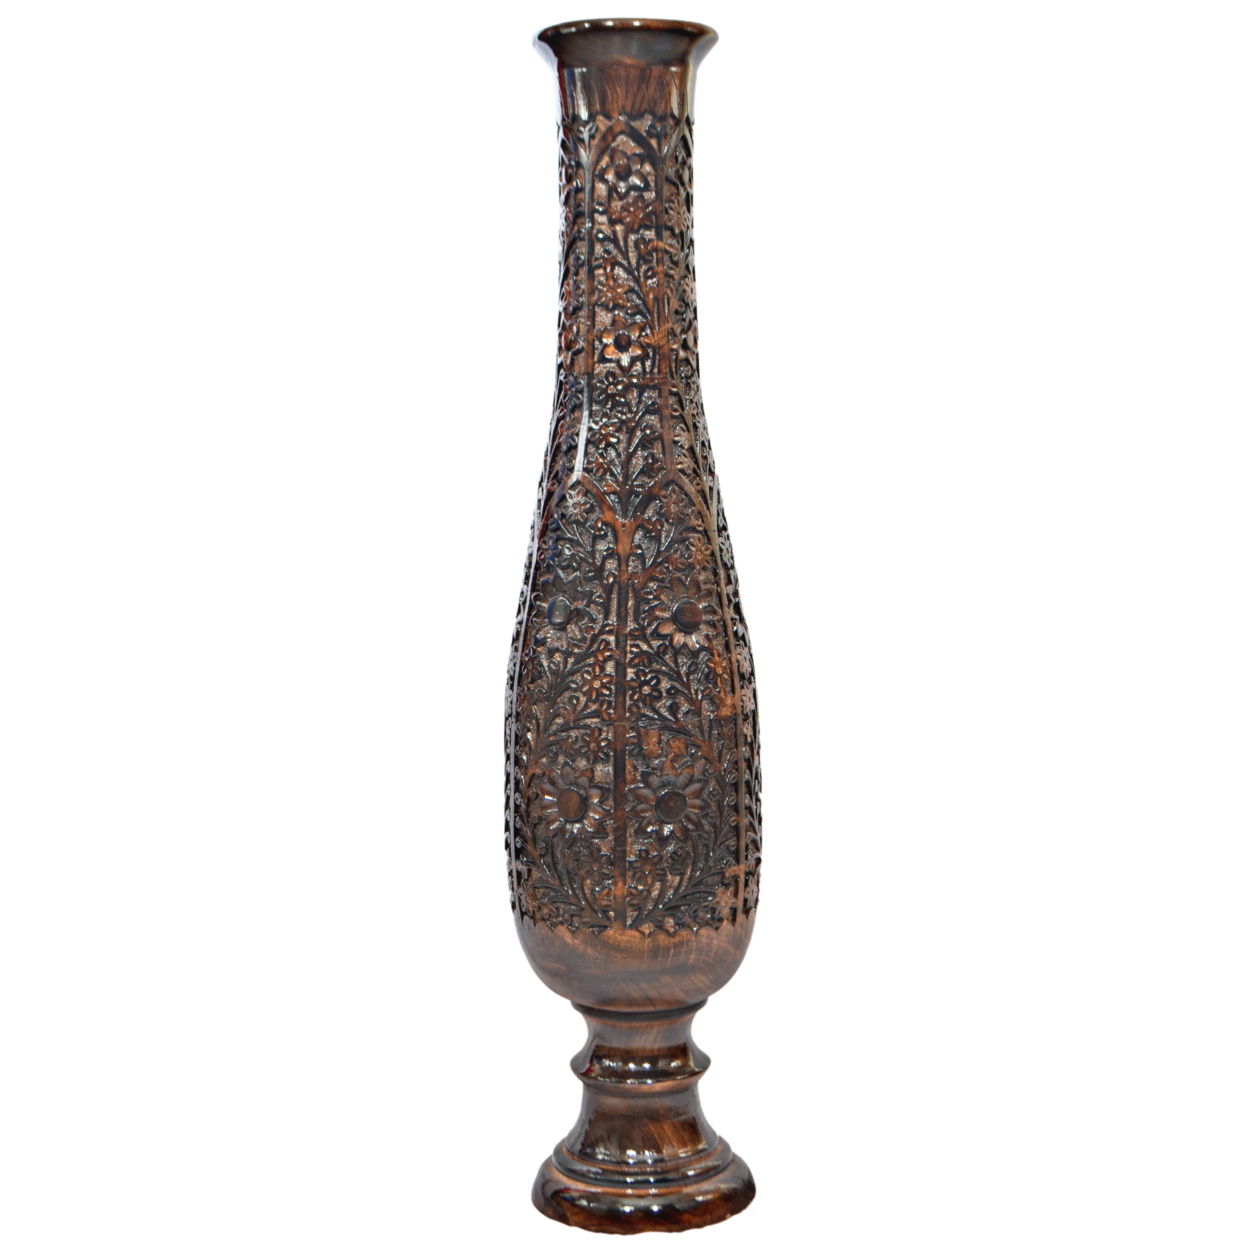 Antique Decorative Hand Curved Brown Mango Wood Floor Flower Vase Trumpet Design With Unique Textured Pattern, 36 Inch